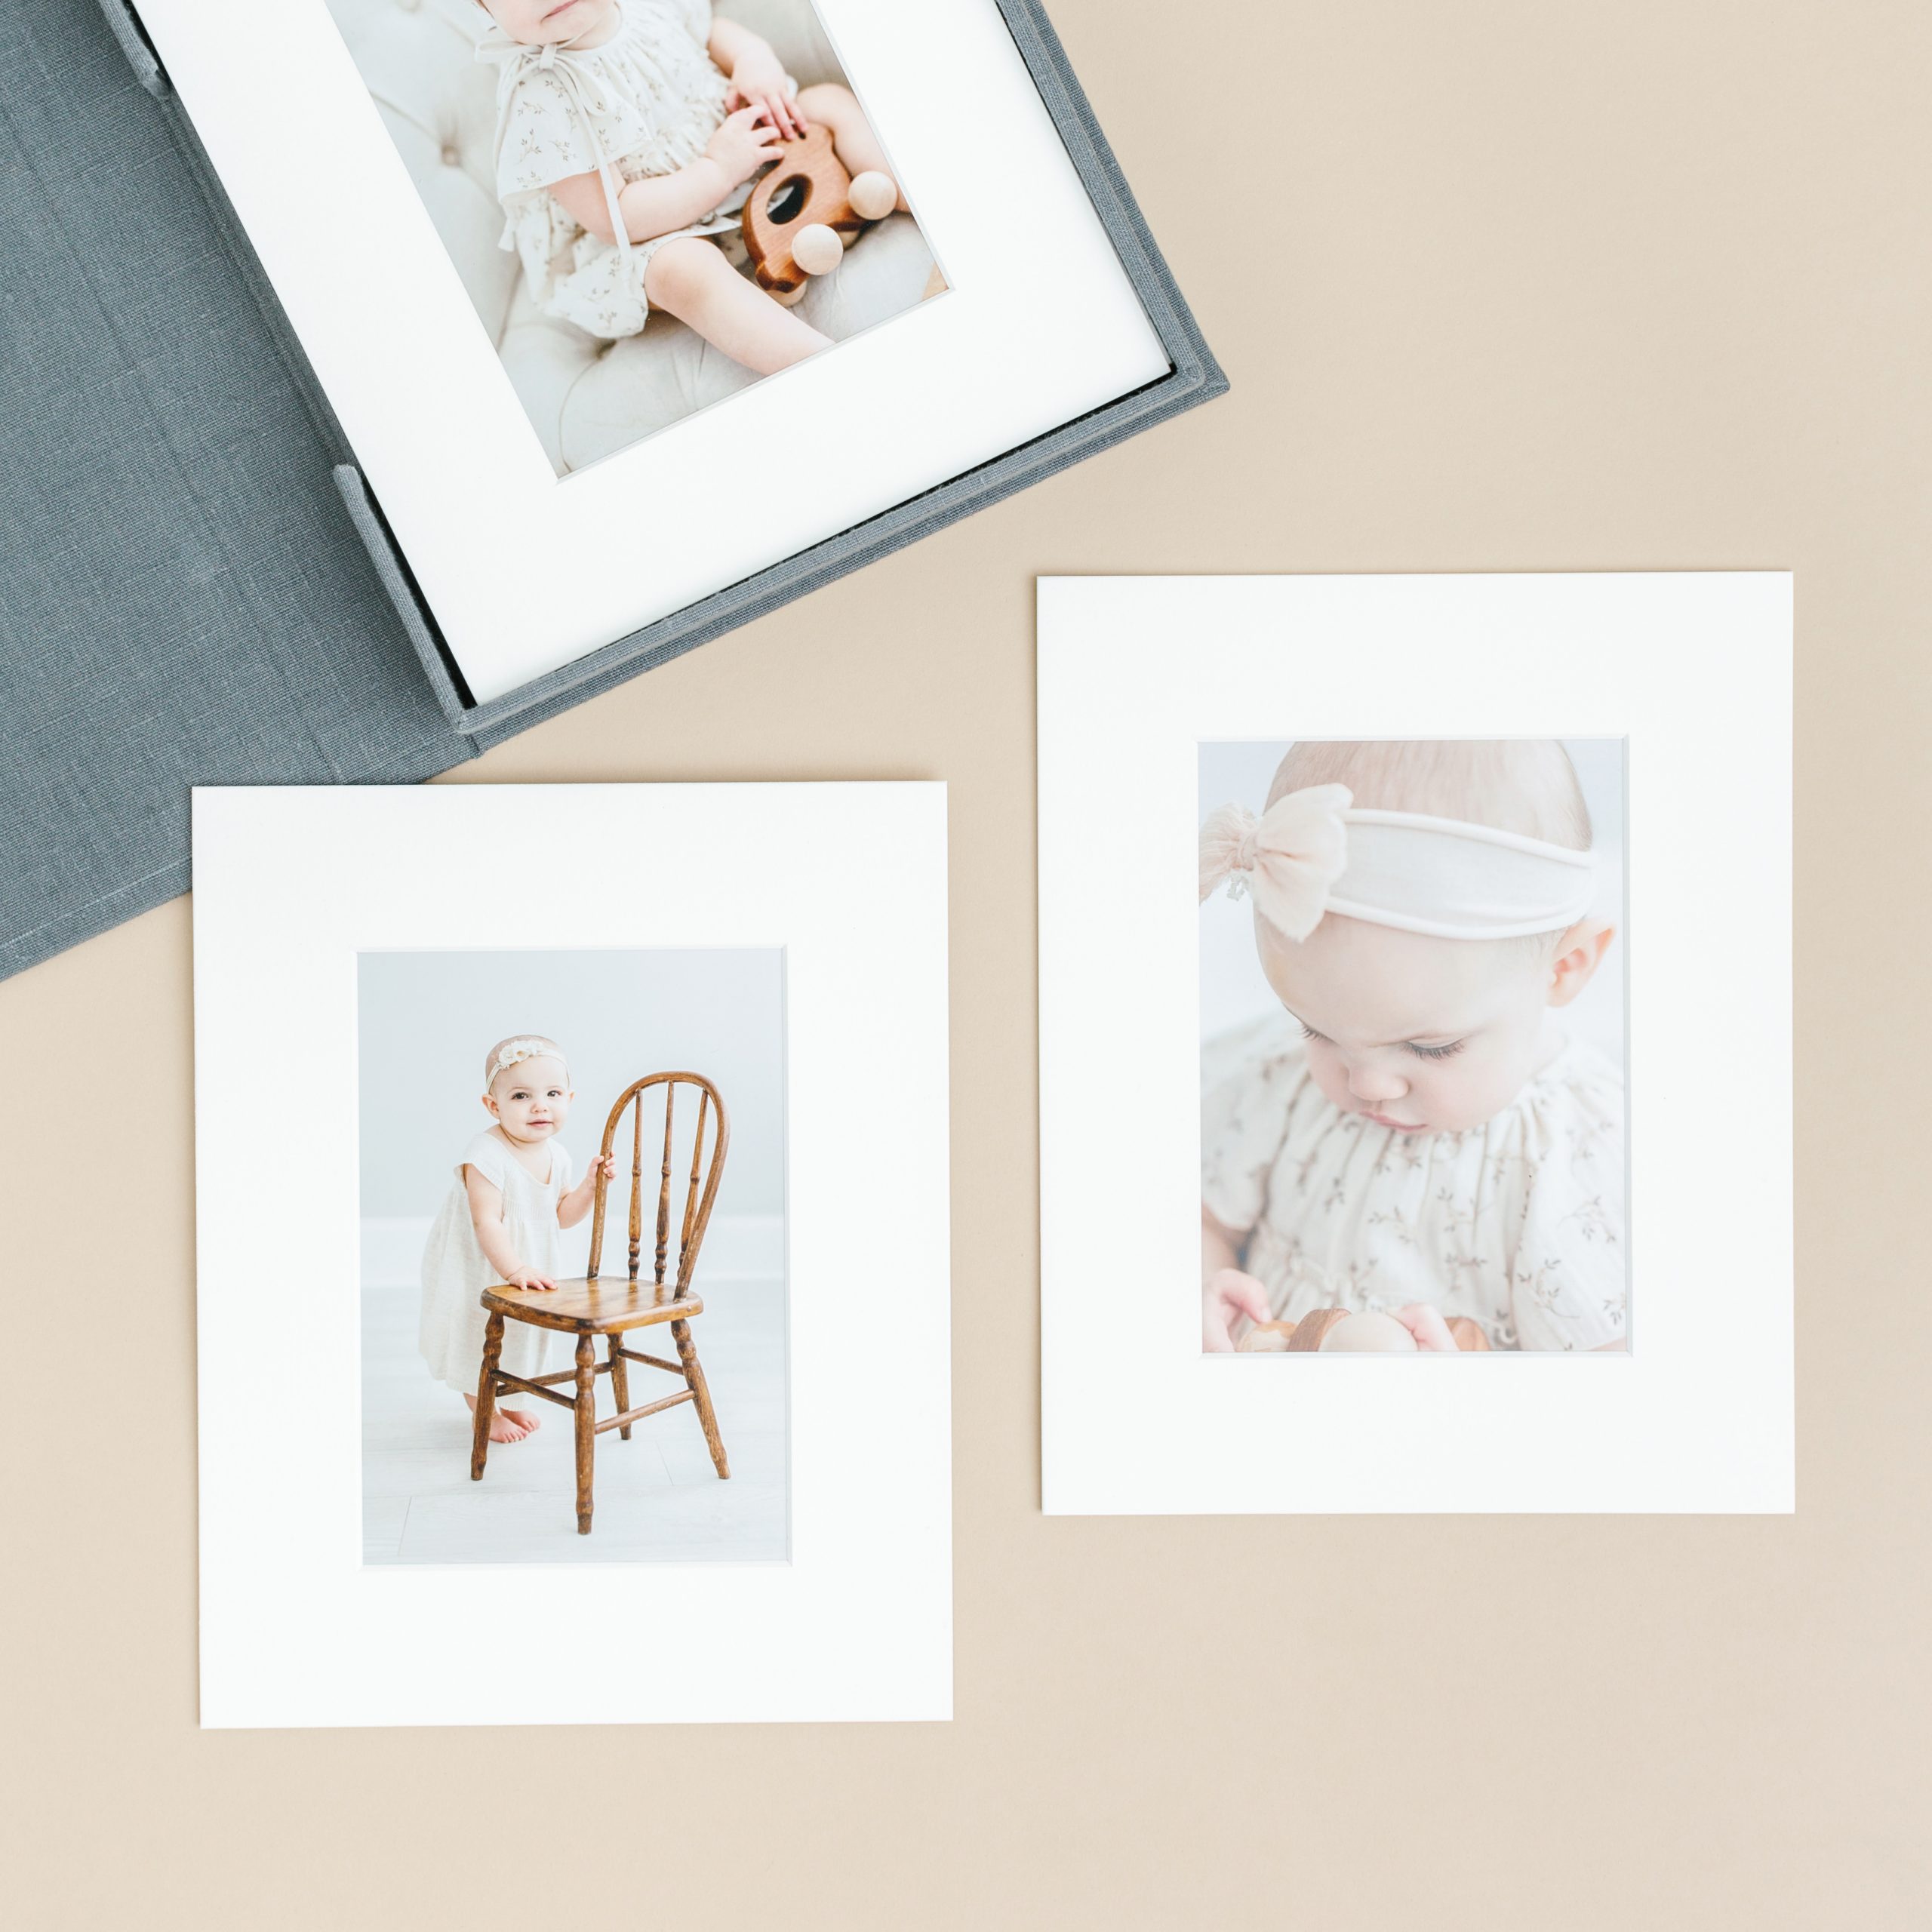 Custom Photo Box with Photo Prints on SALE